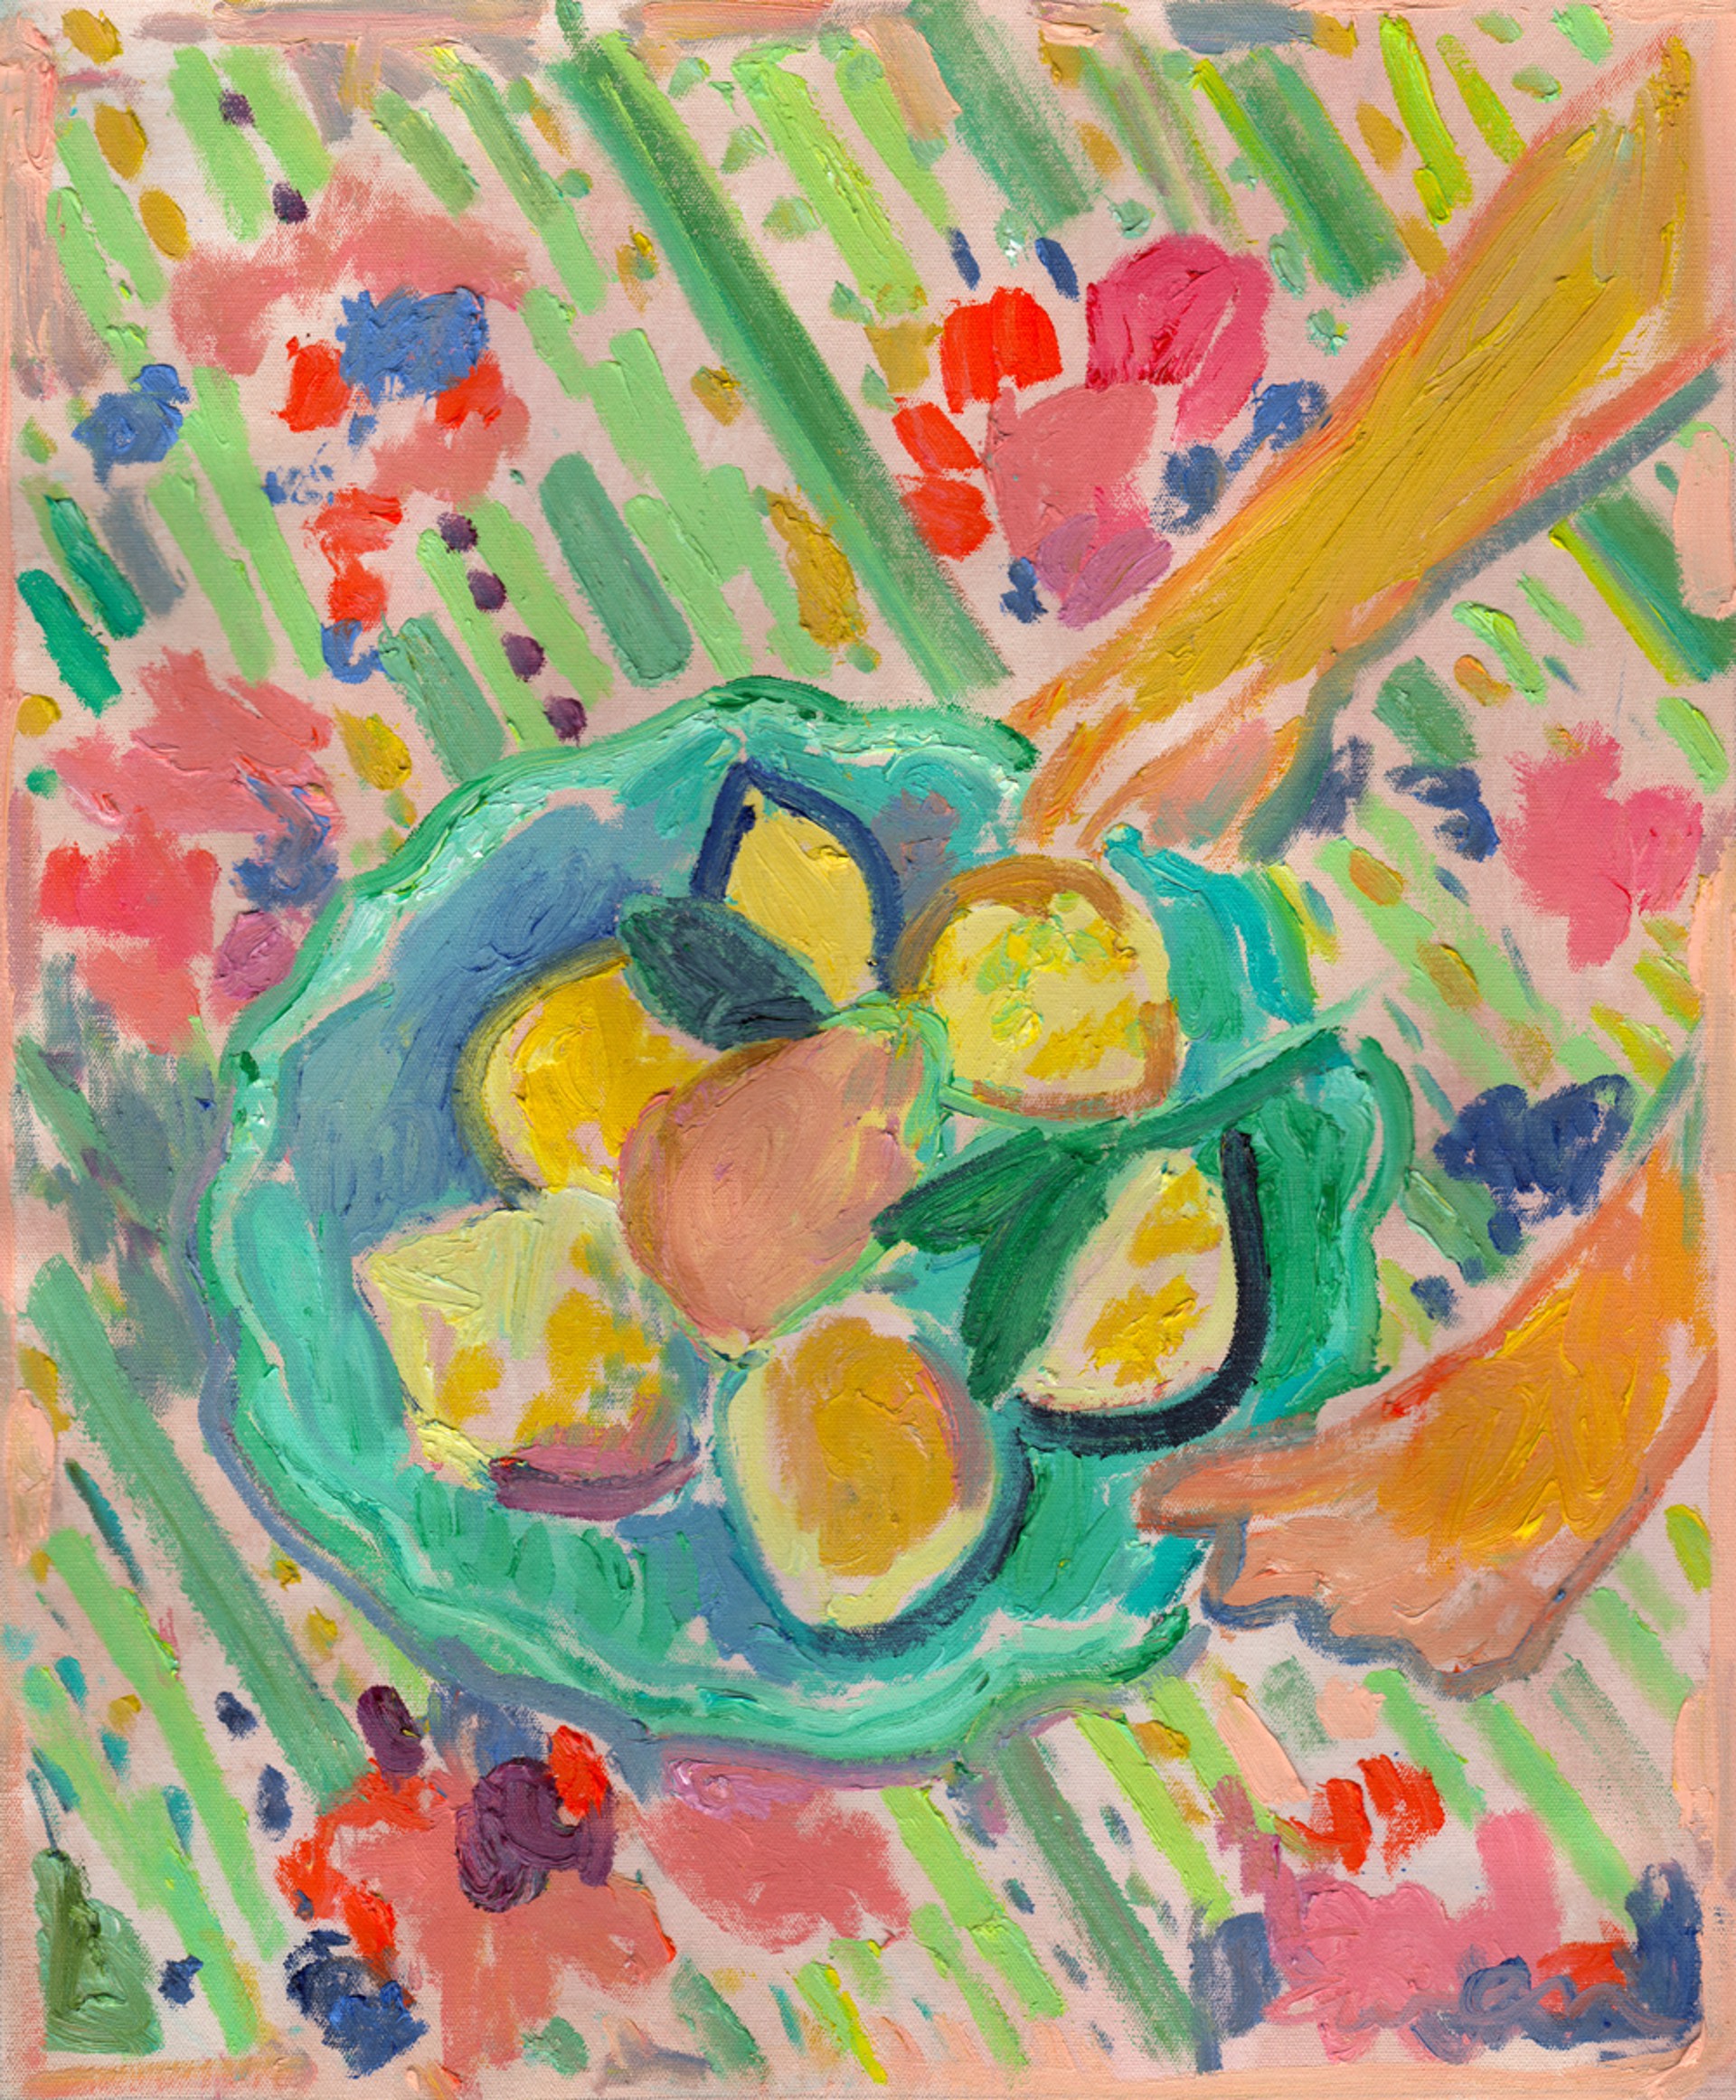 Bowl of Lemons 1 by Anne-Louise Ewen